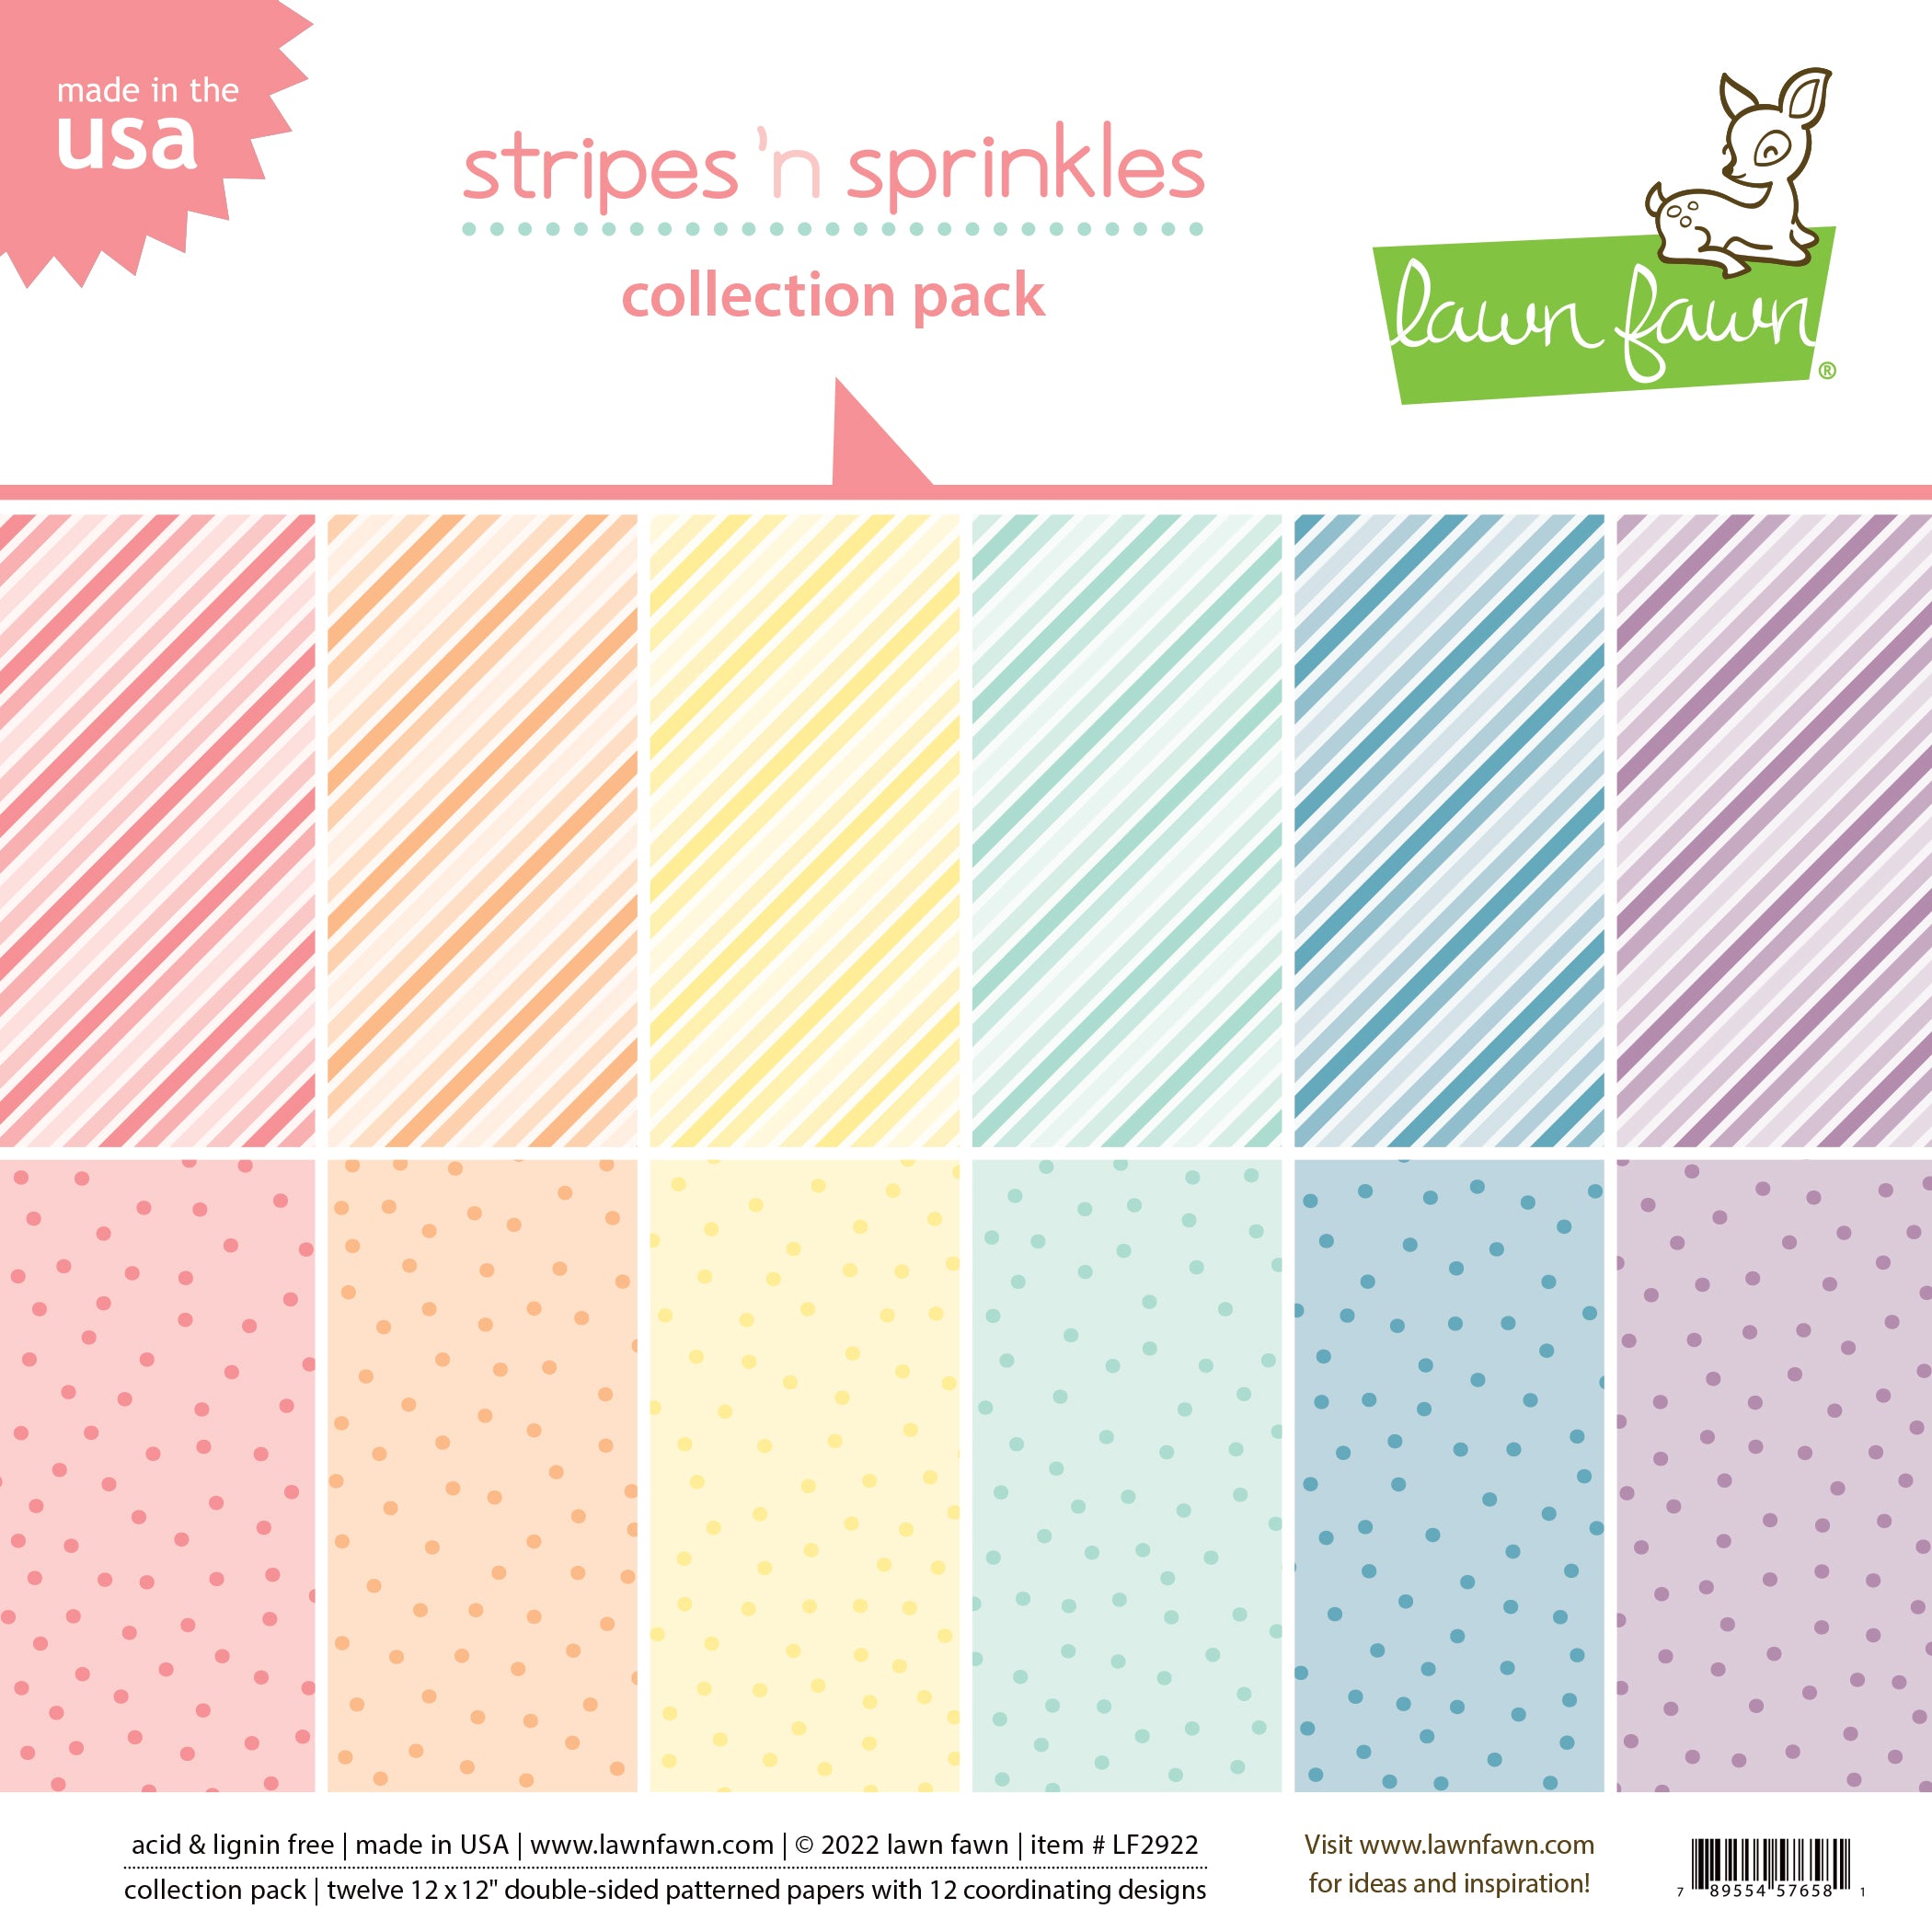 stripes 'n sprinkles collection pack